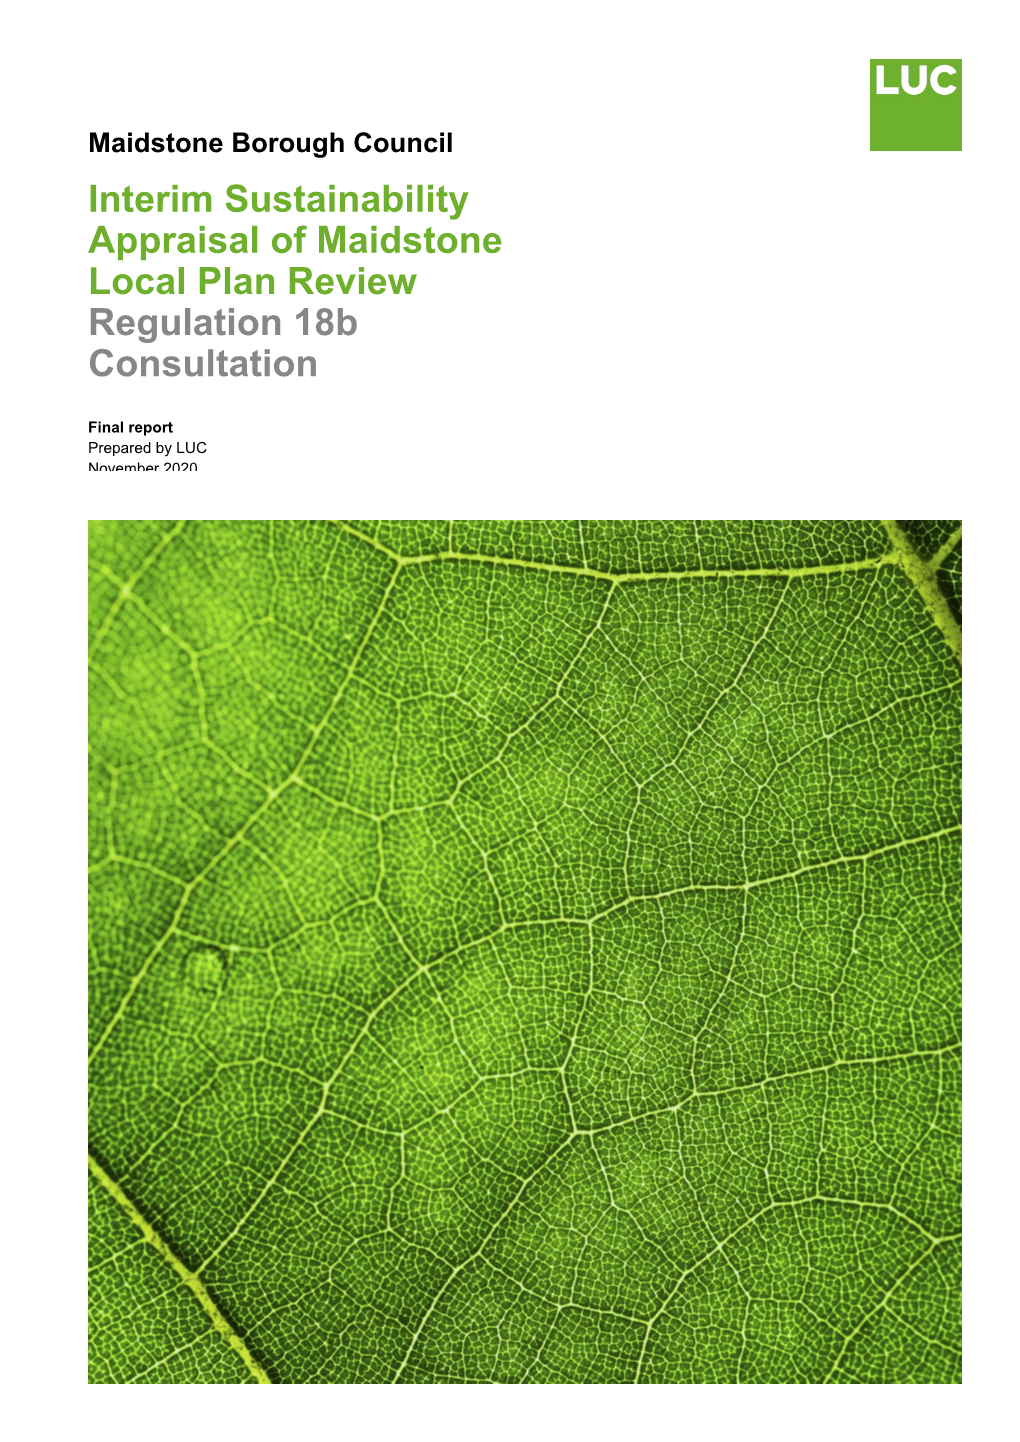 Interim Sustainability Appraisal of Maidstone Local Plan Review Regulation 18B Consultation